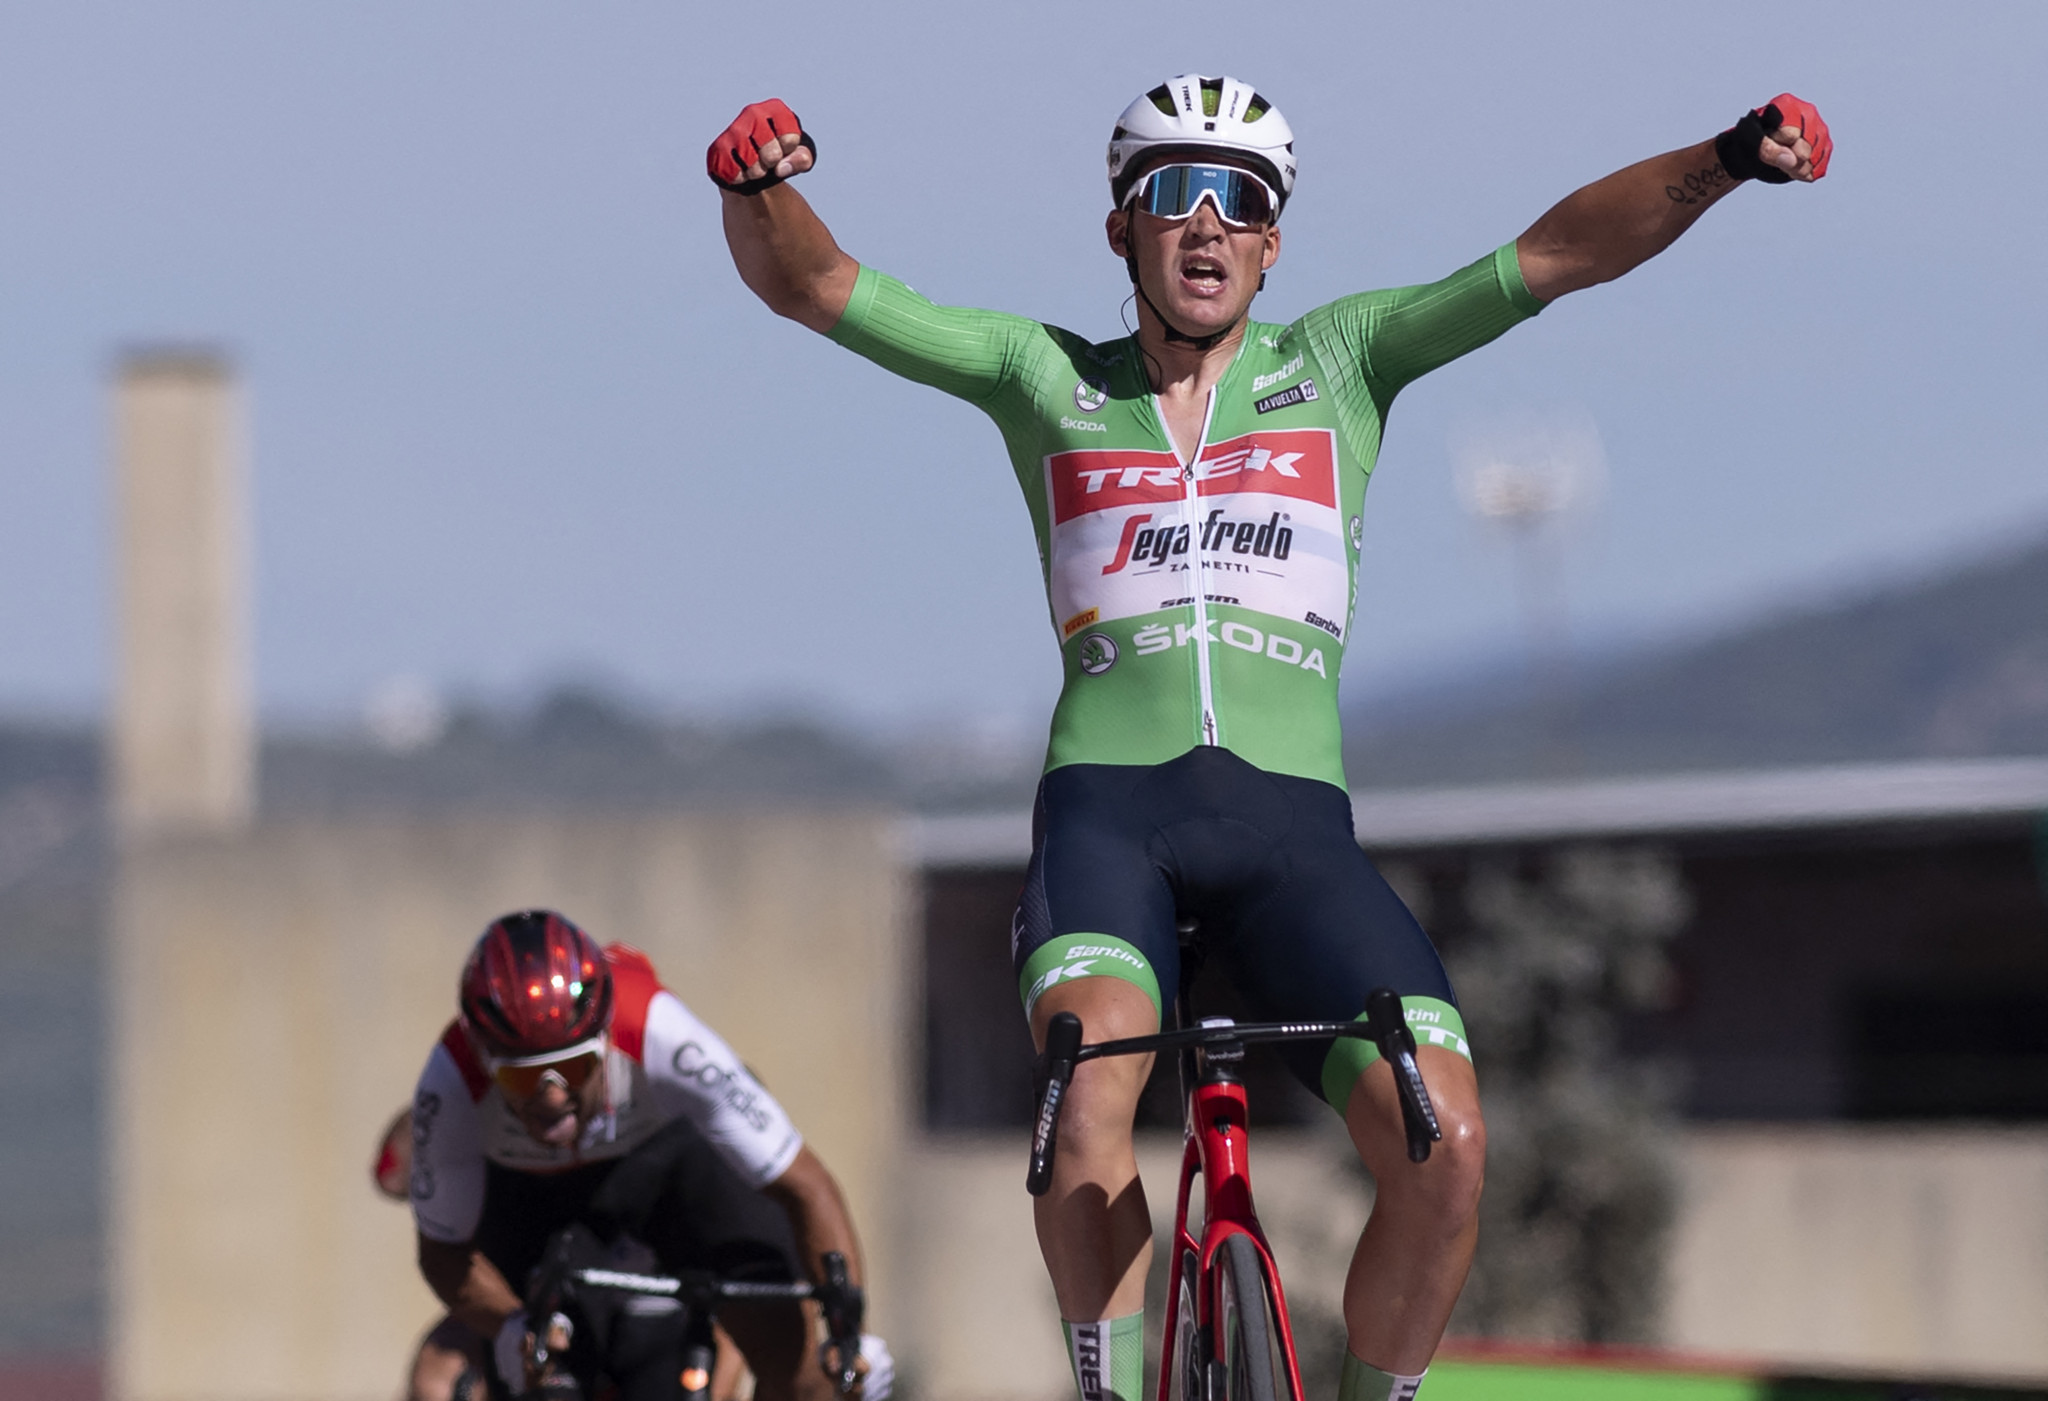 Pedersen earns maiden stage victory on Vuelta a España